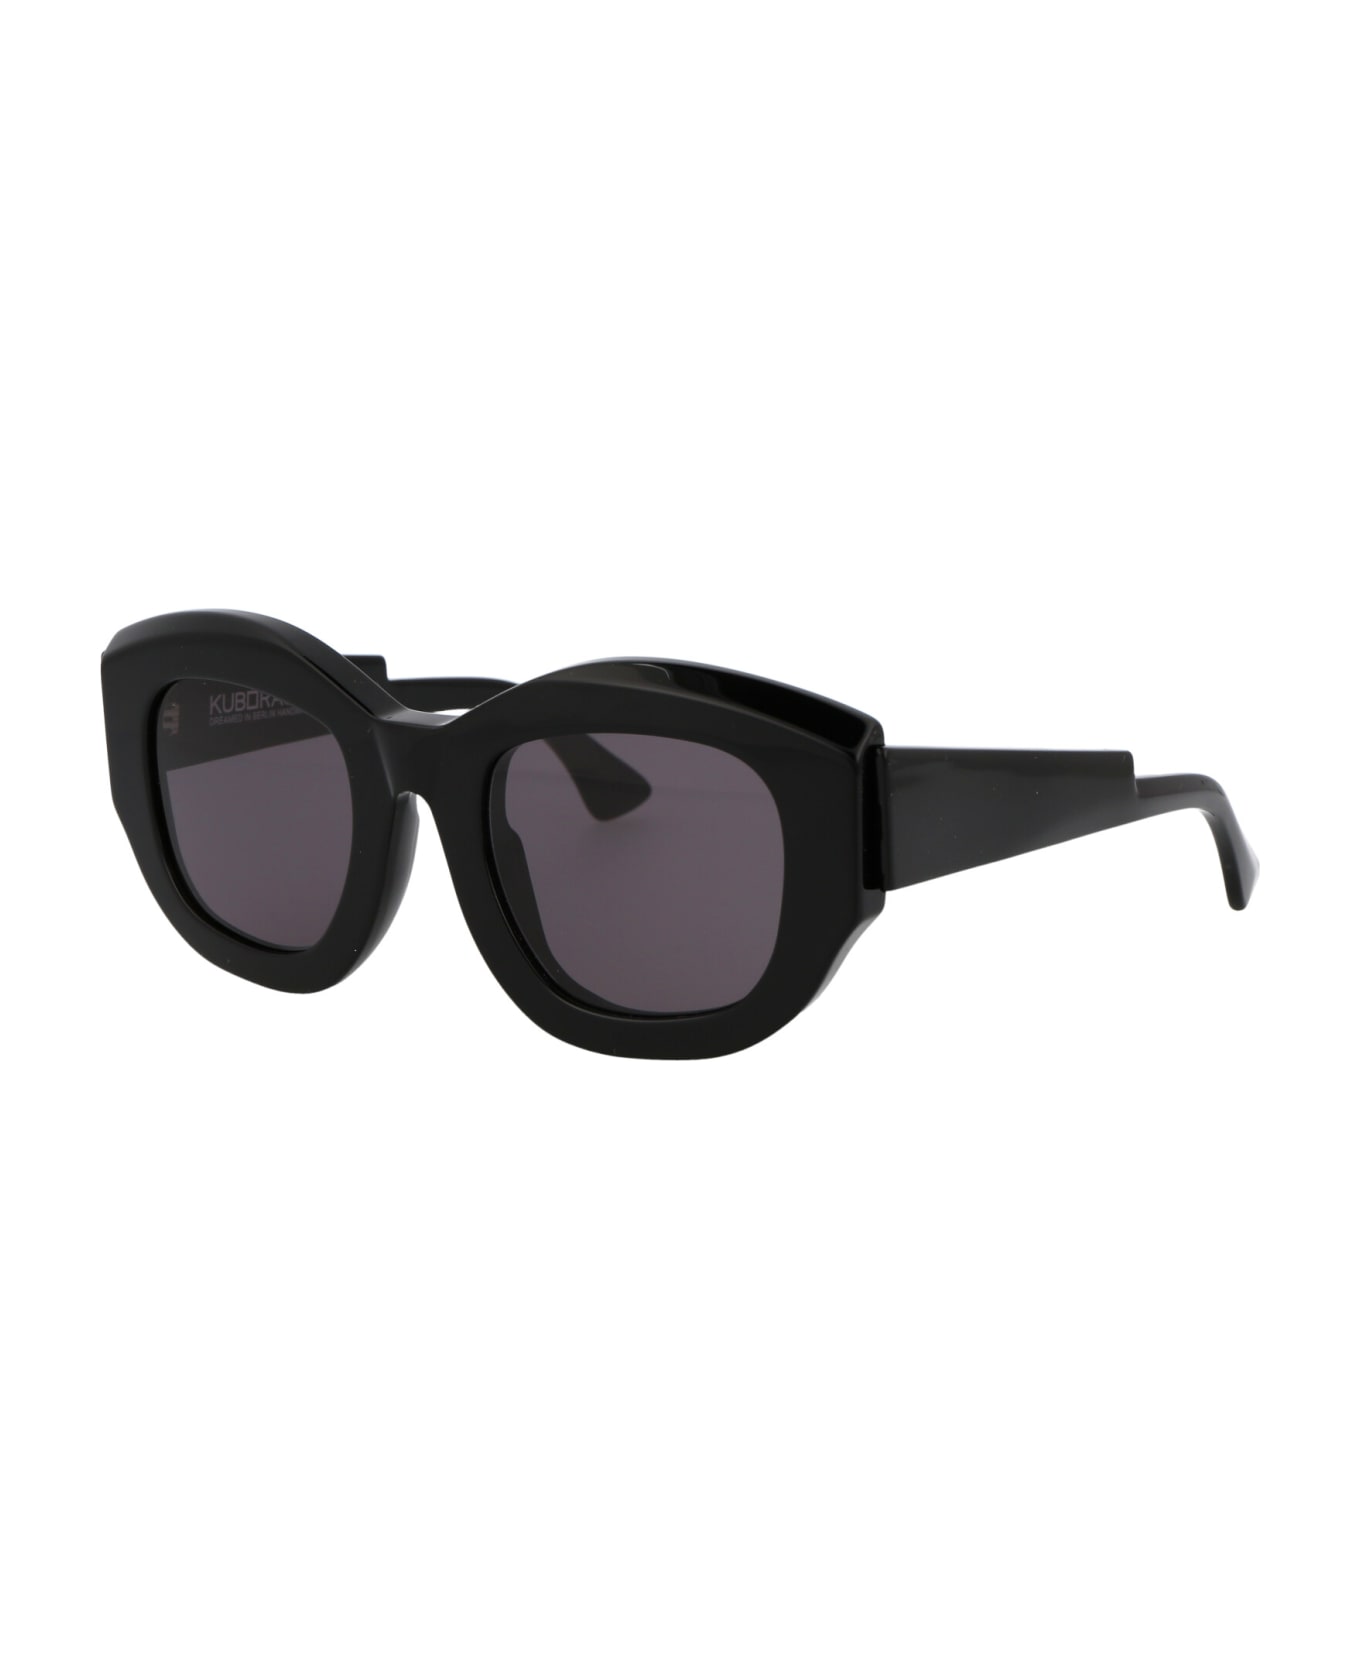 Kuboraum Maske B2 Sunglasses - BS 2grey サングラス